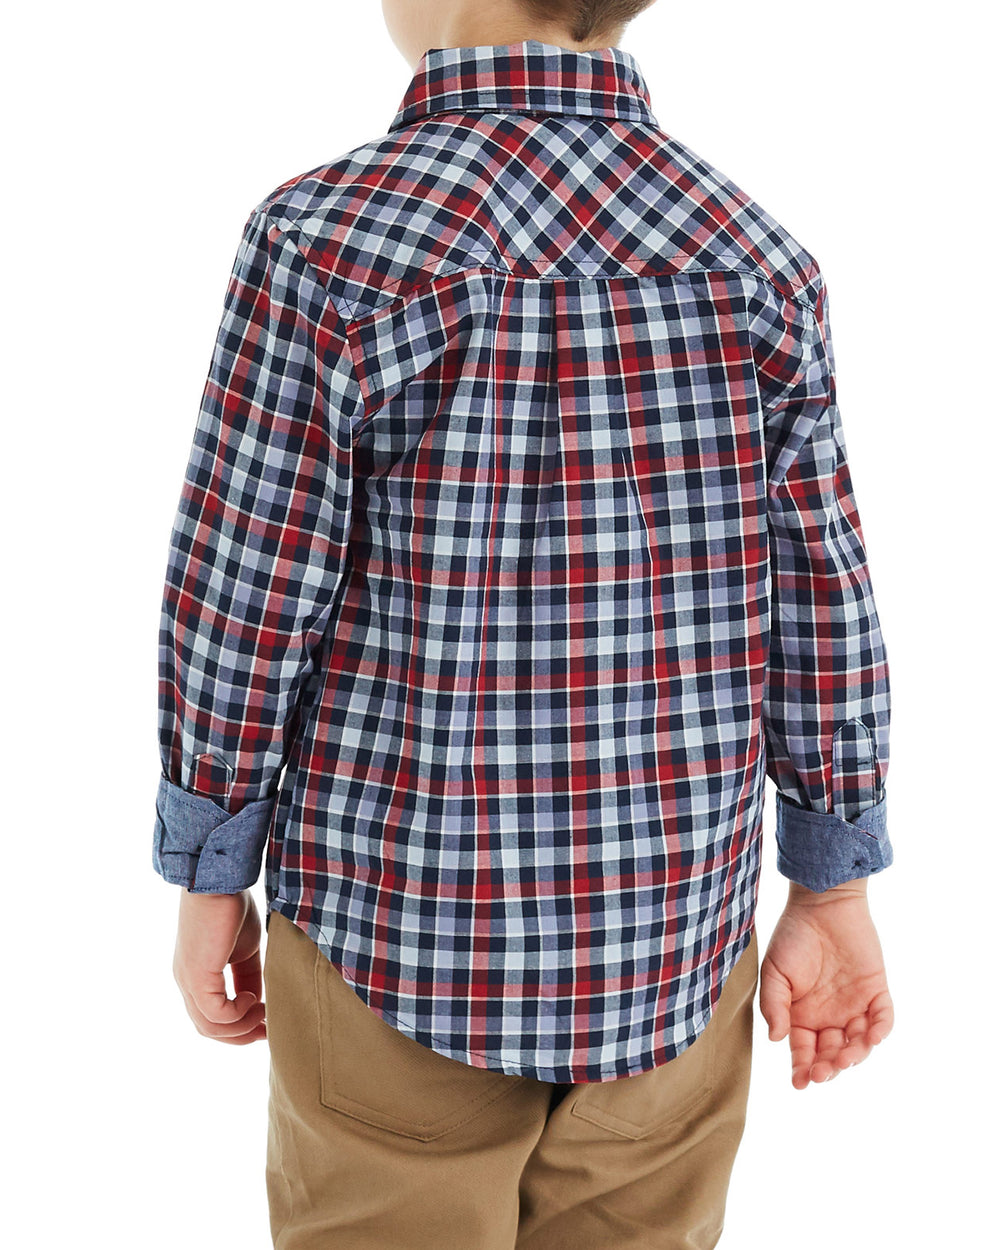 Boys' Red/Blue Long-Sleeve Plaid Button-Down Shirt (Sizes 4-7)